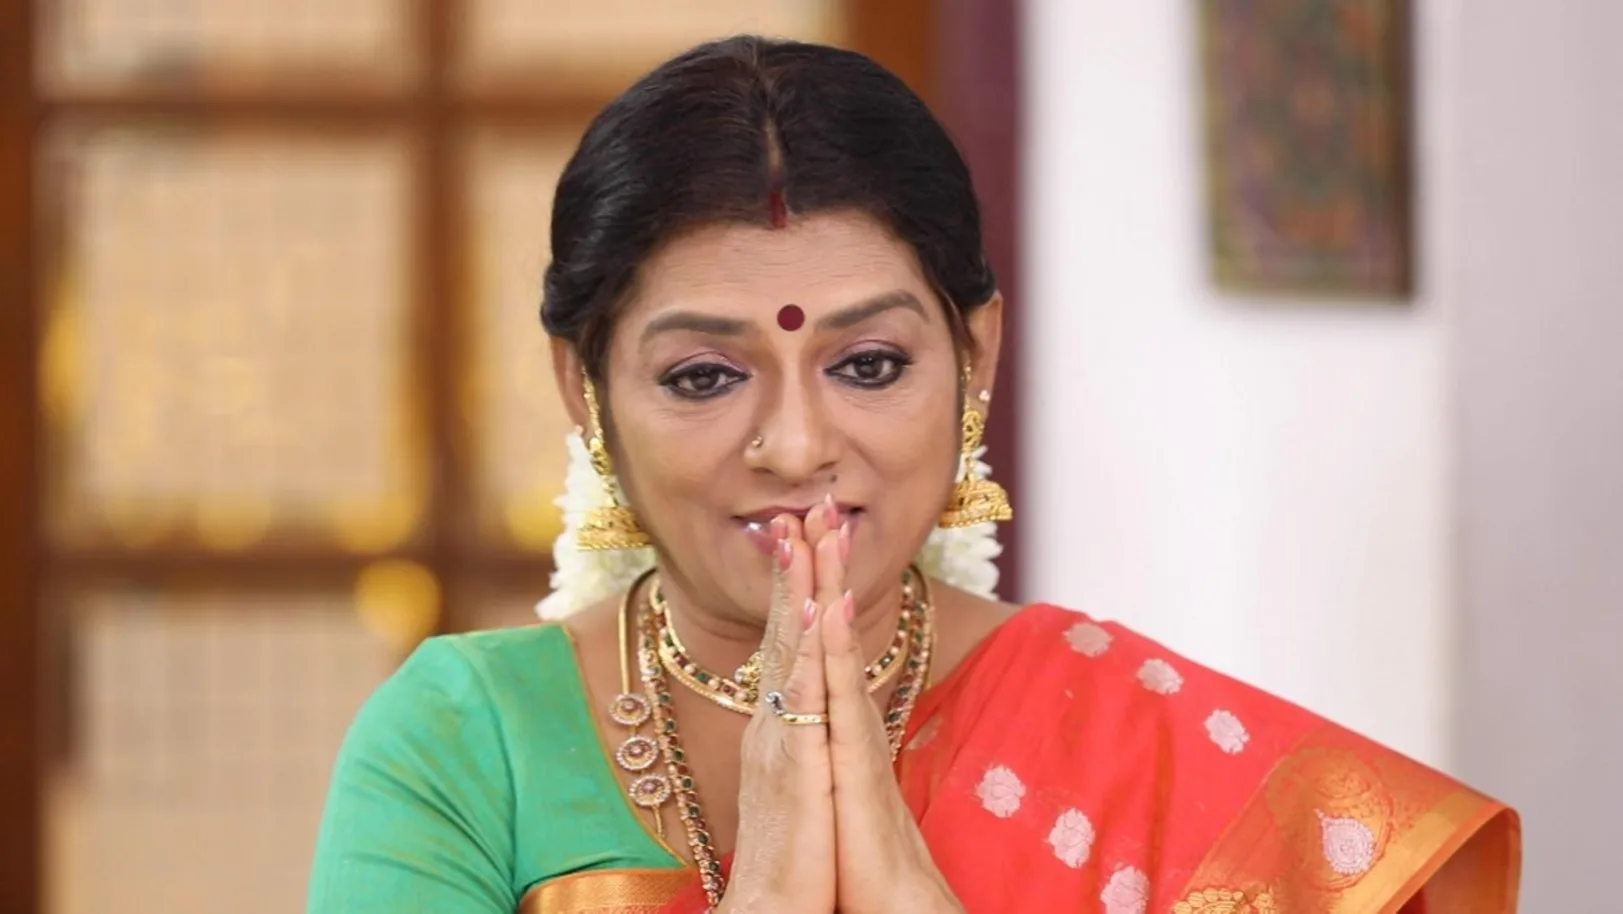 Oru Oorla Rendu Rajakumari - February 19, 2022 - Episode Spoiler